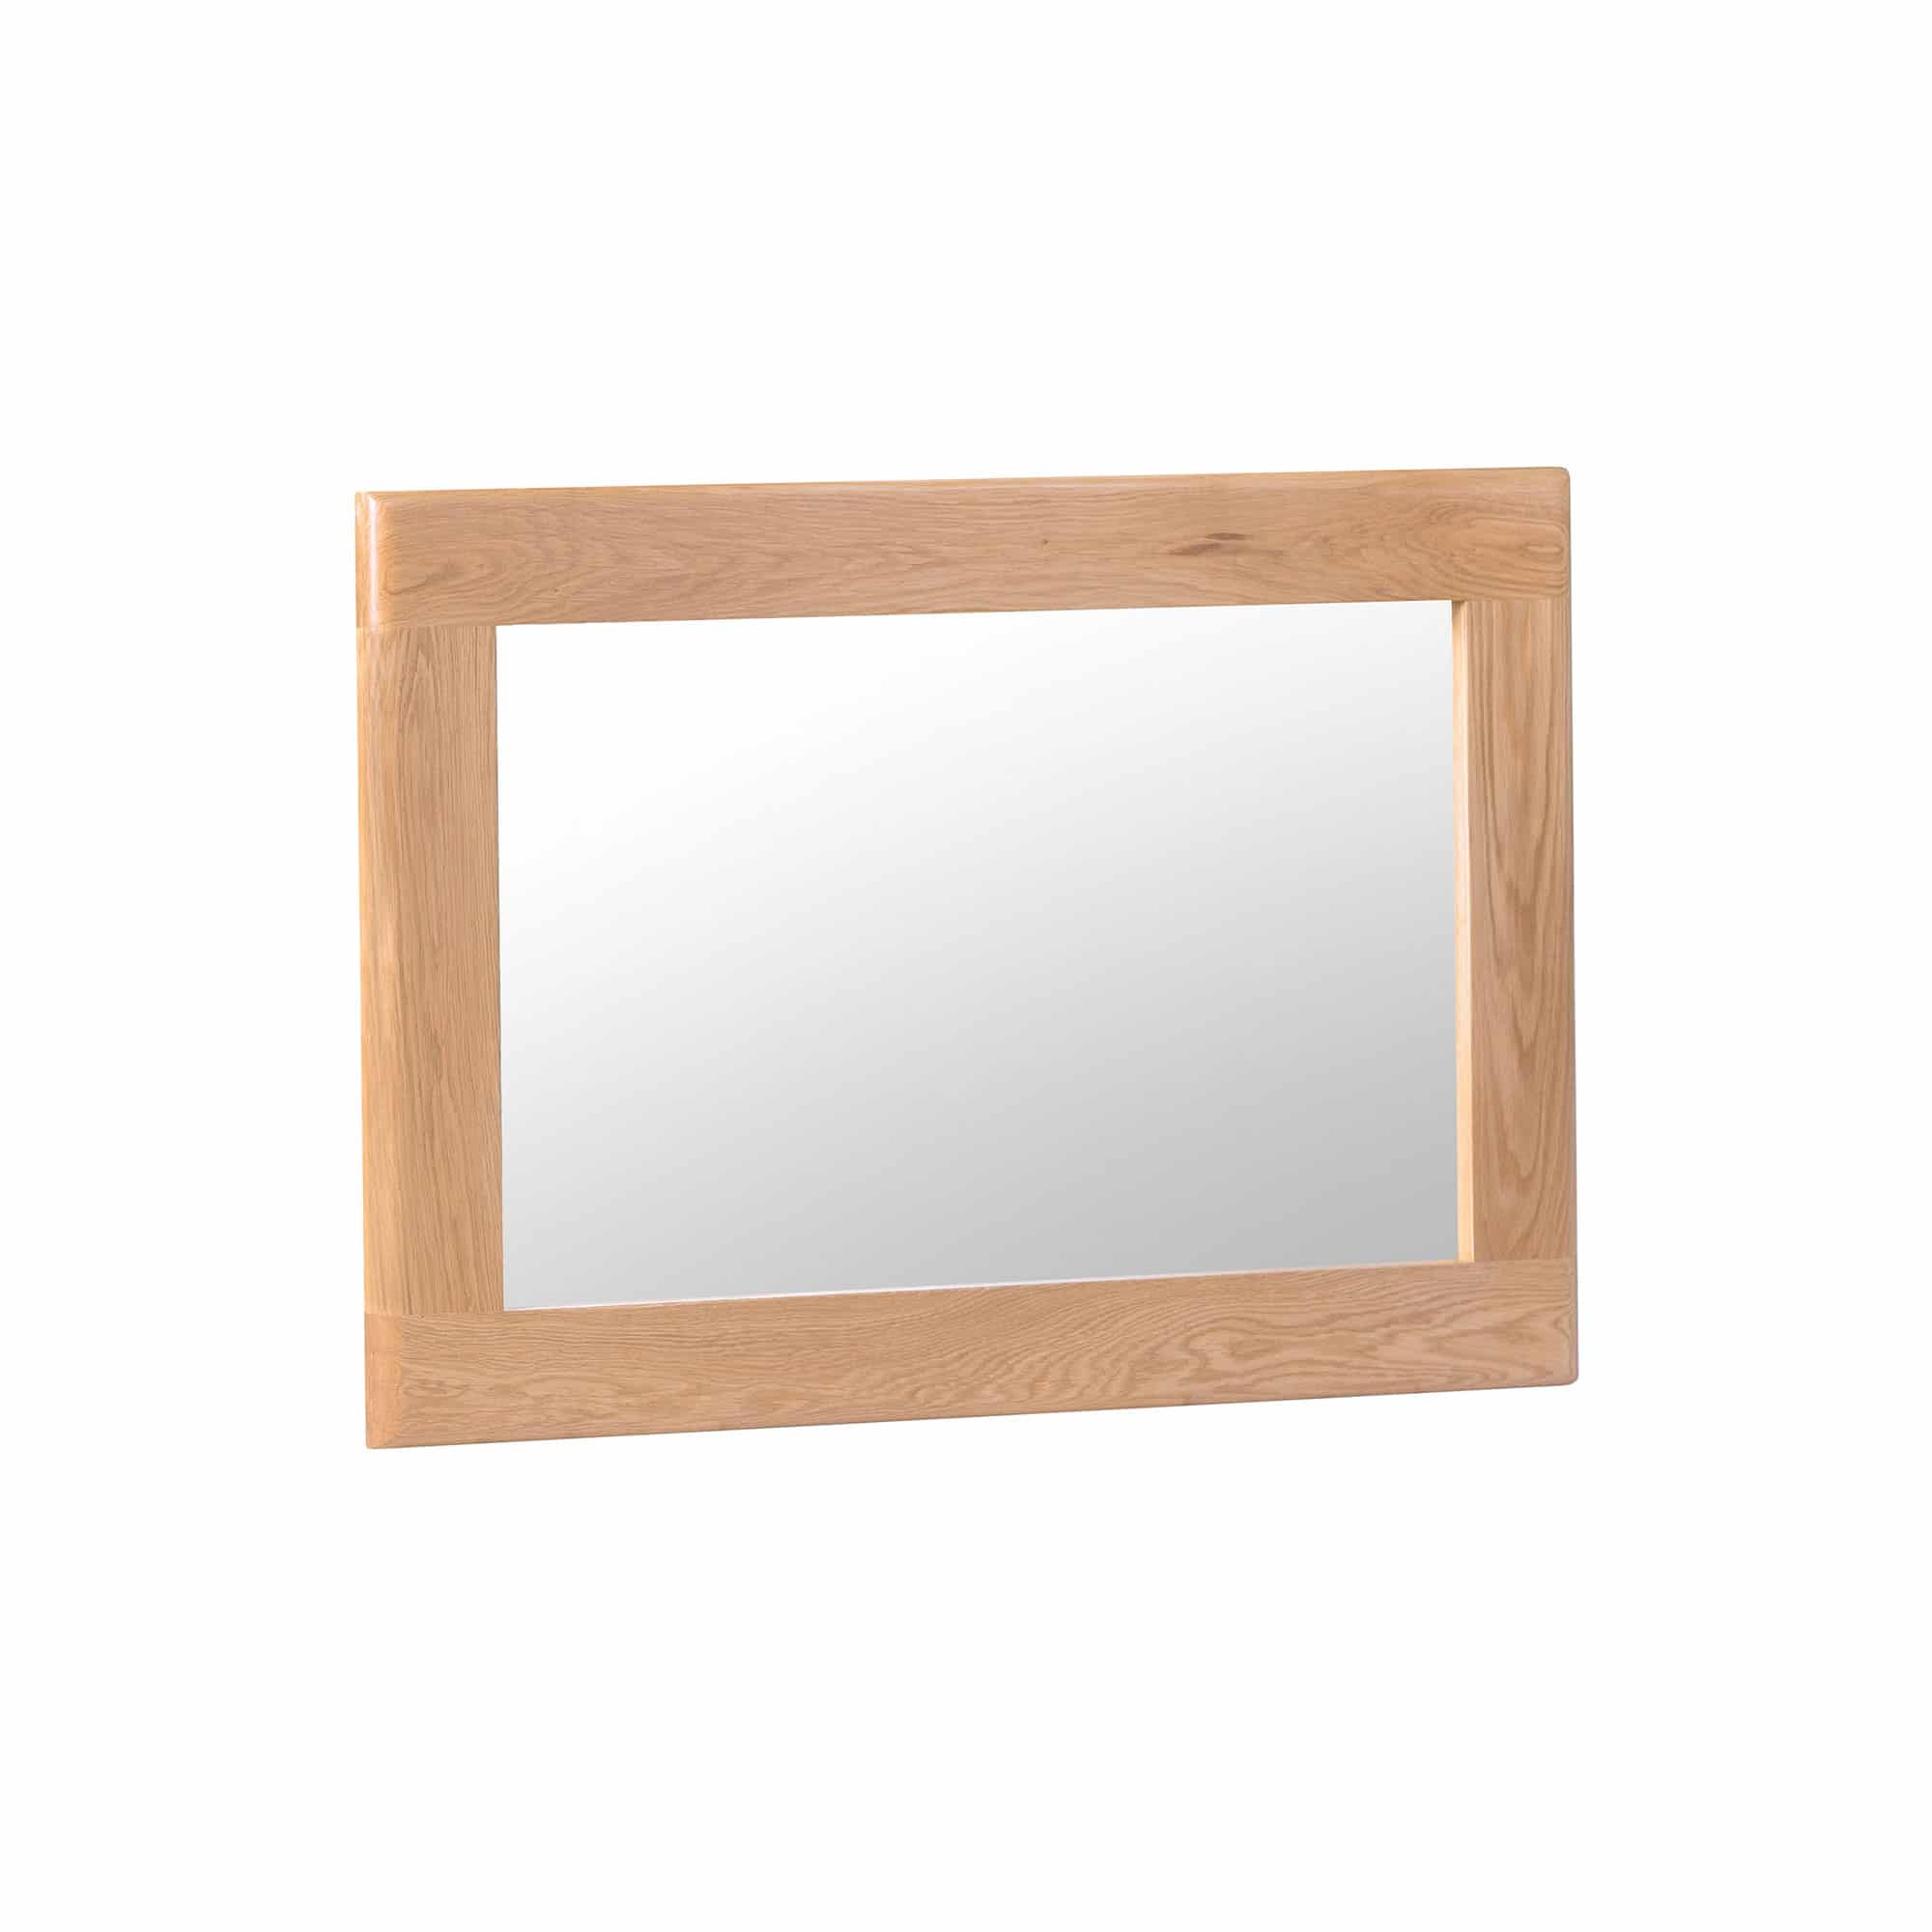 Zrkadlo v modernom štýle - Dubu.sk - verní kvalite